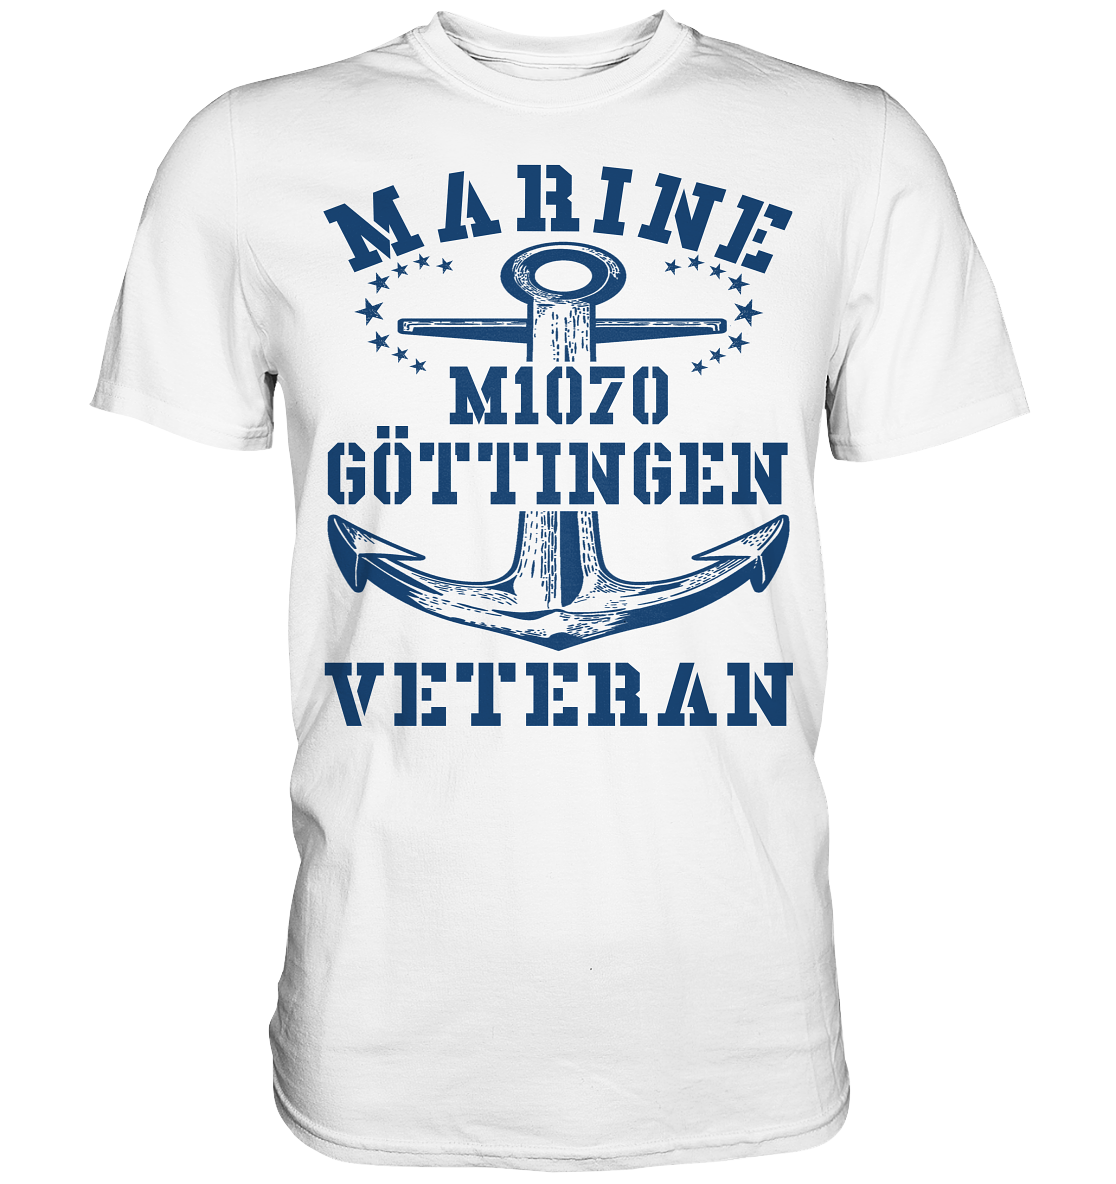 MARINE VETERAN M1070 GÖTTINGEN - Premium Shirt